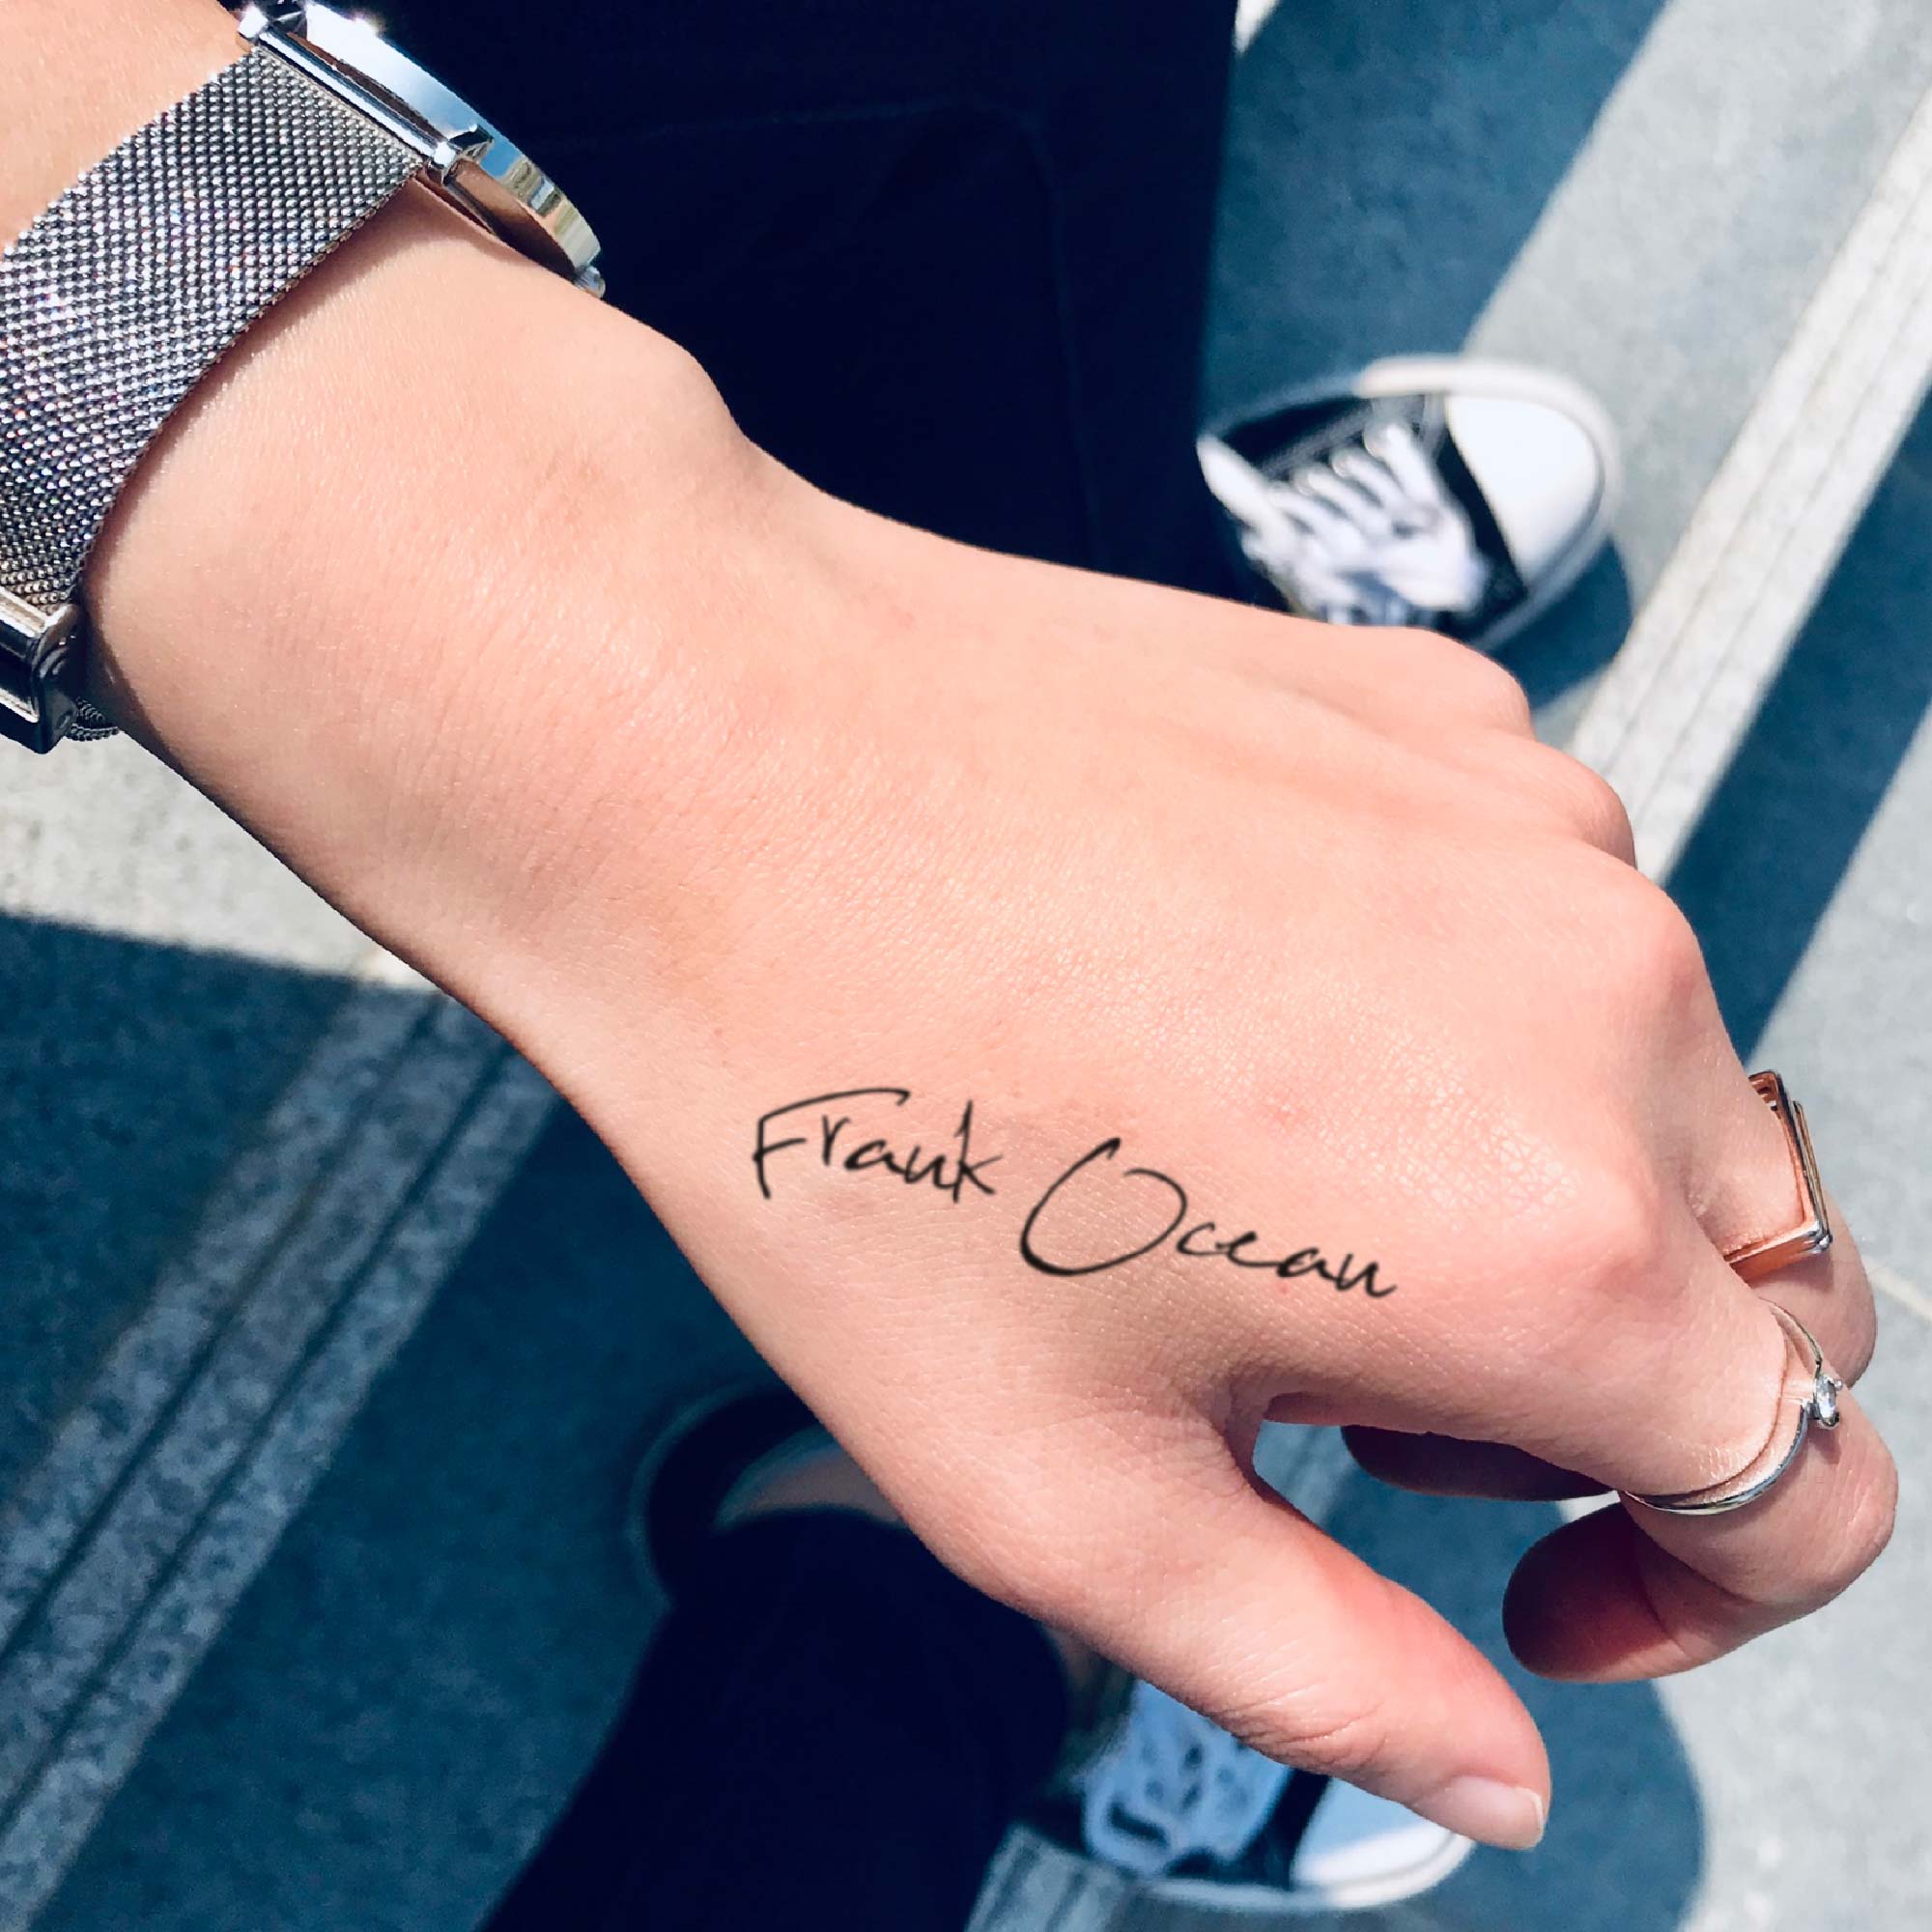 Frank Ocean Tattoo Design Idea - OhMyTat